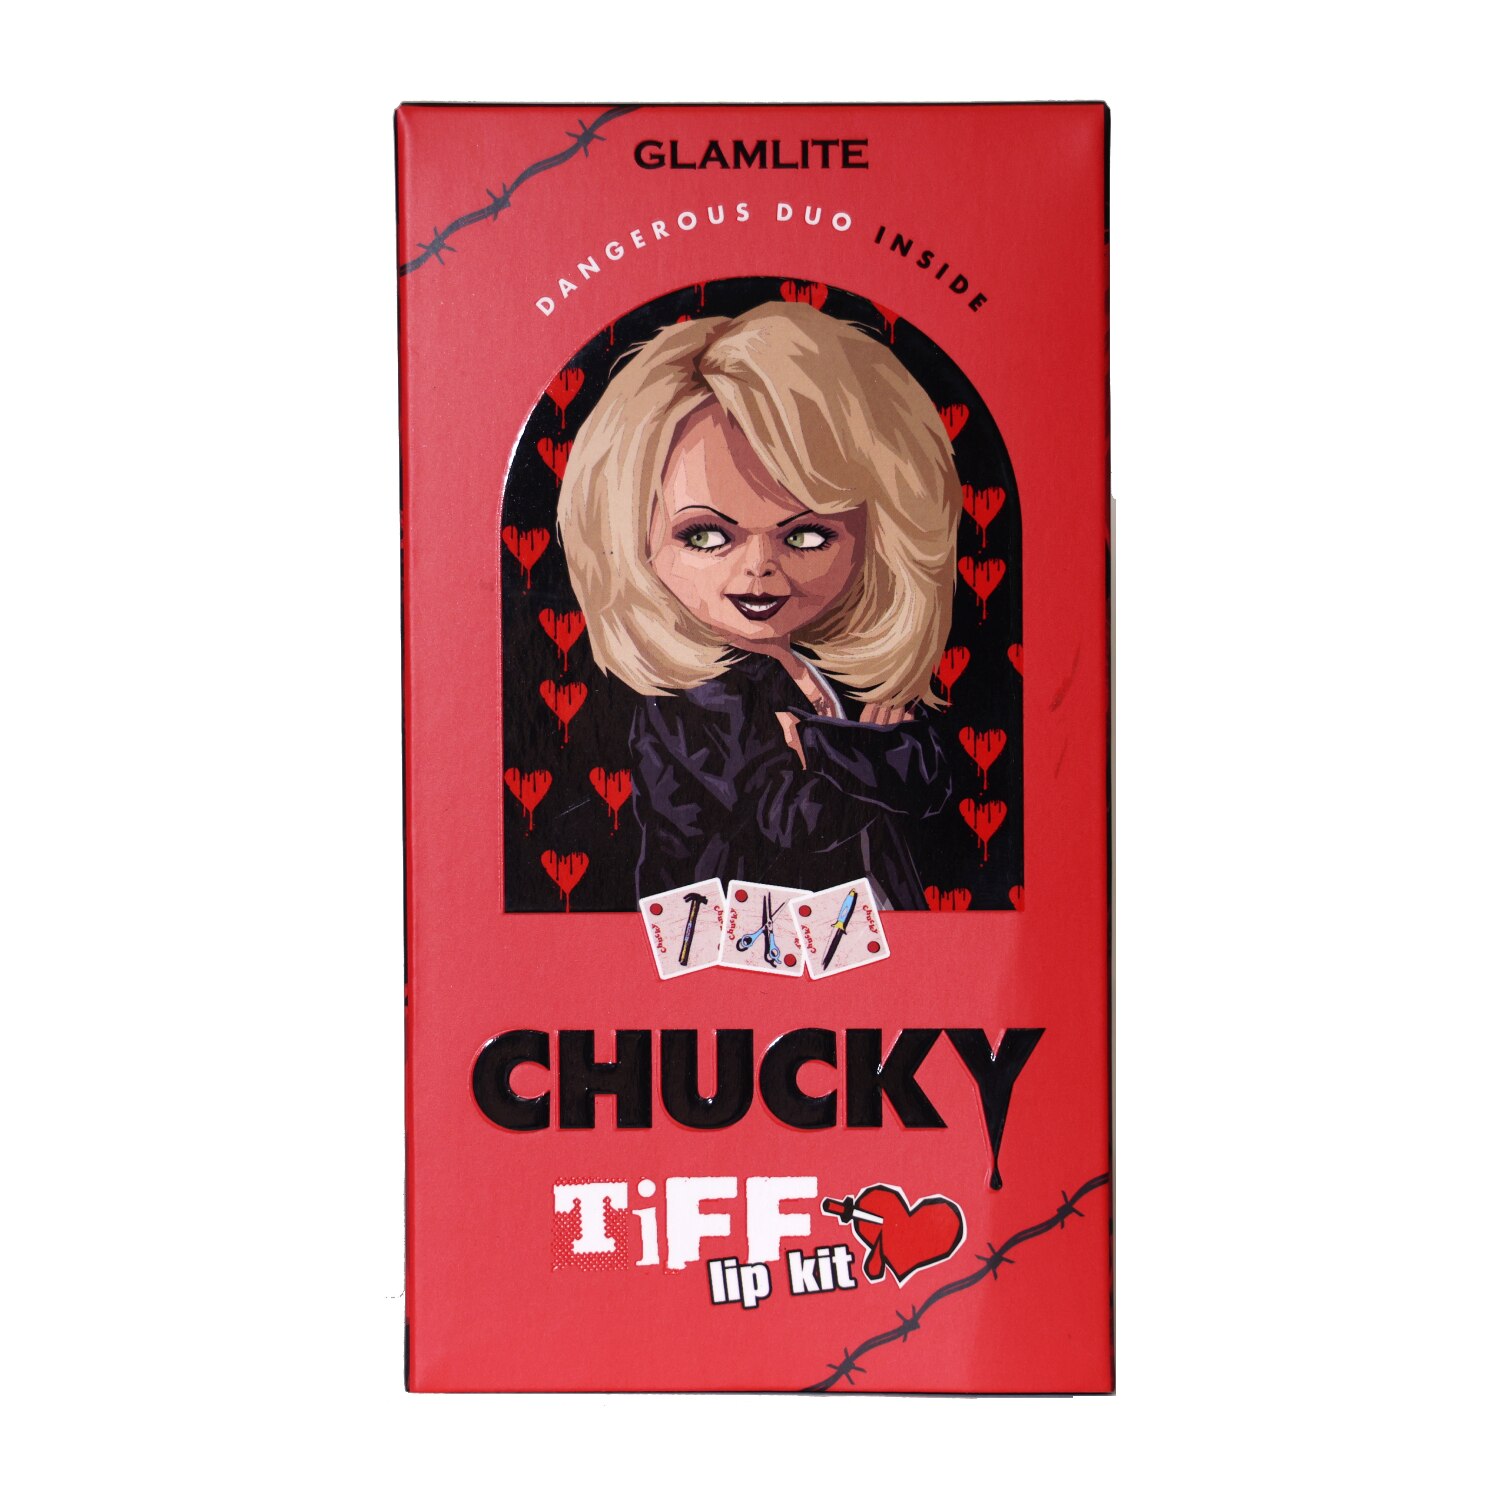 Chucky x Glamlite Lip Kit, Tiff